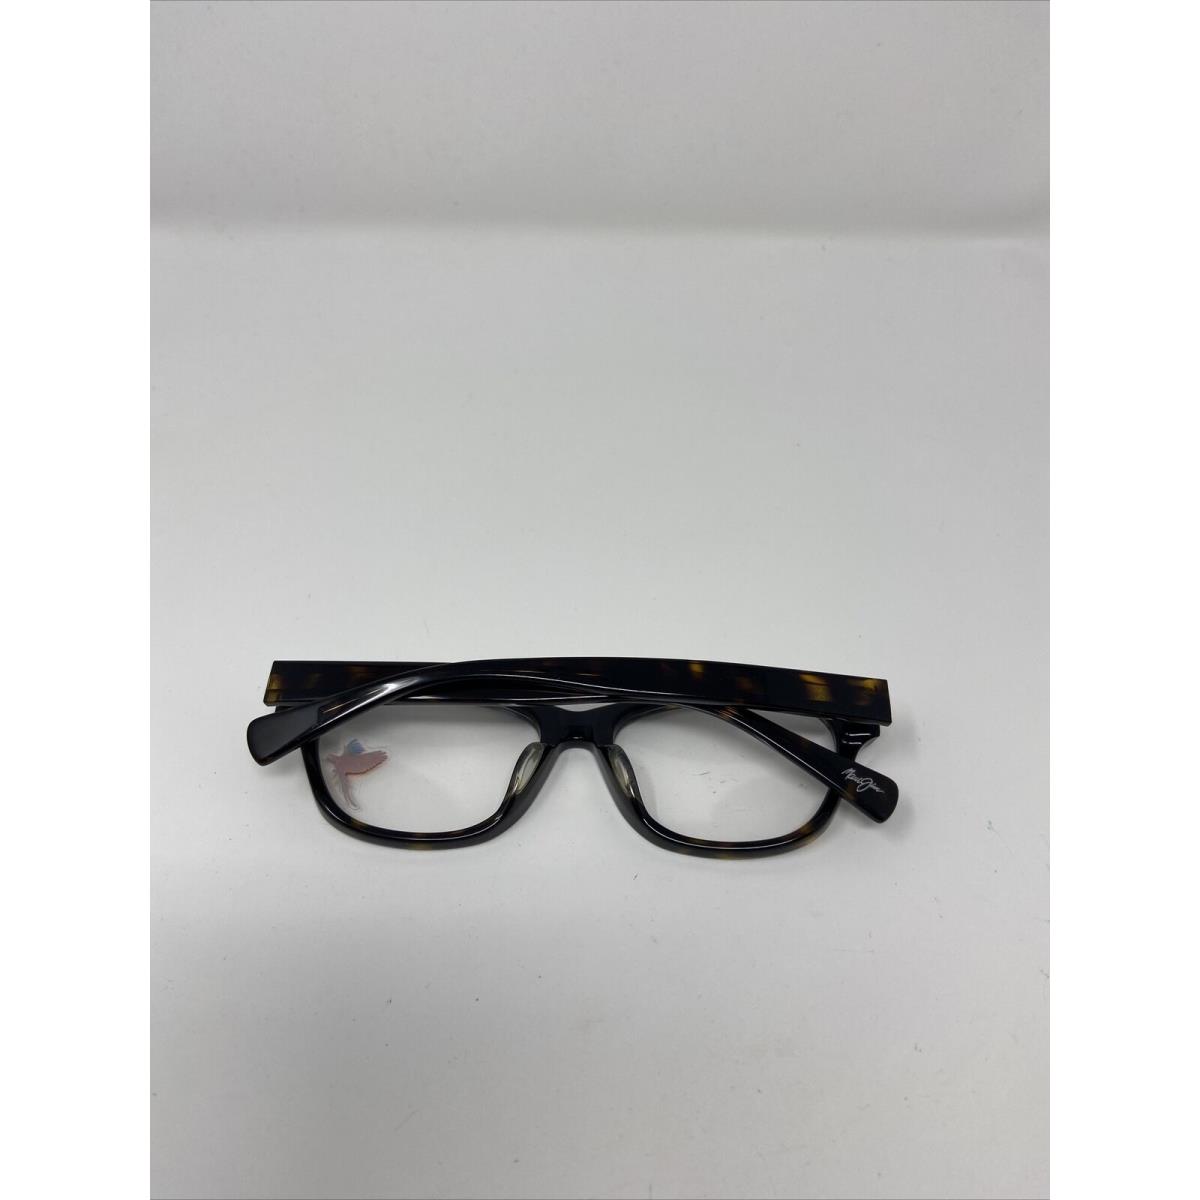 Maui Jim eyeglasses  - Brown Frame 7